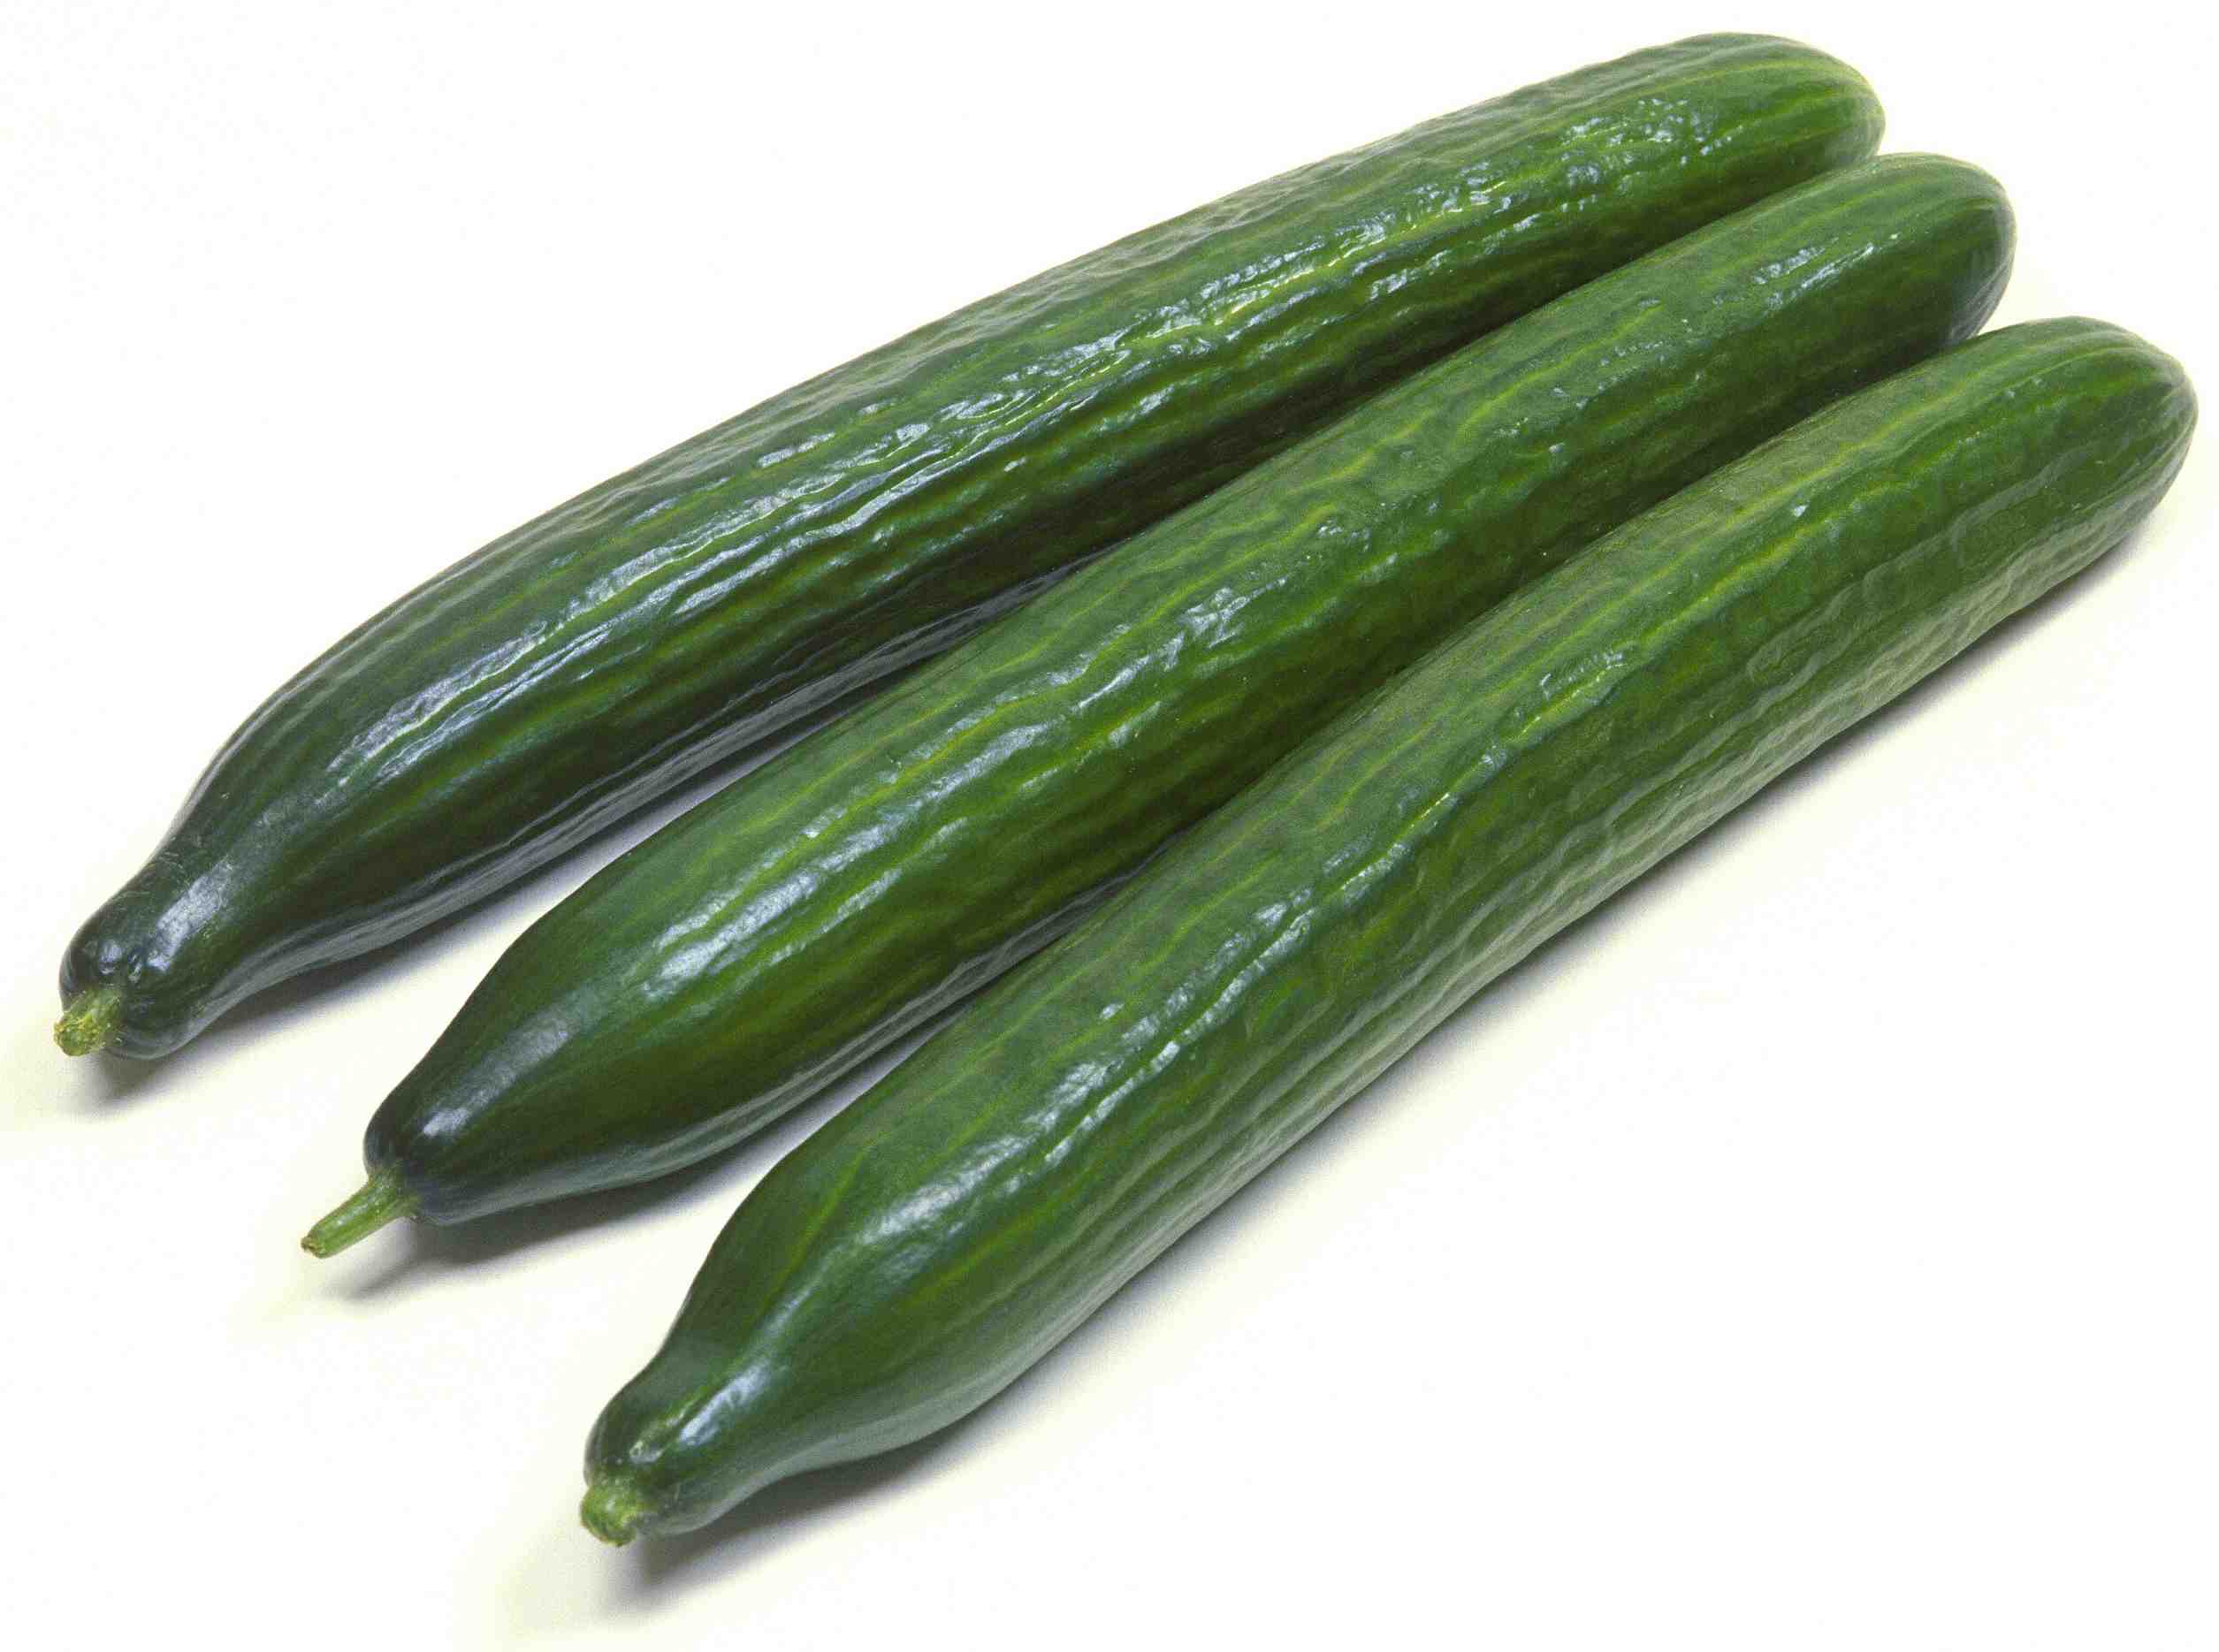 Wellsley Farms English Seedless Cucumbers